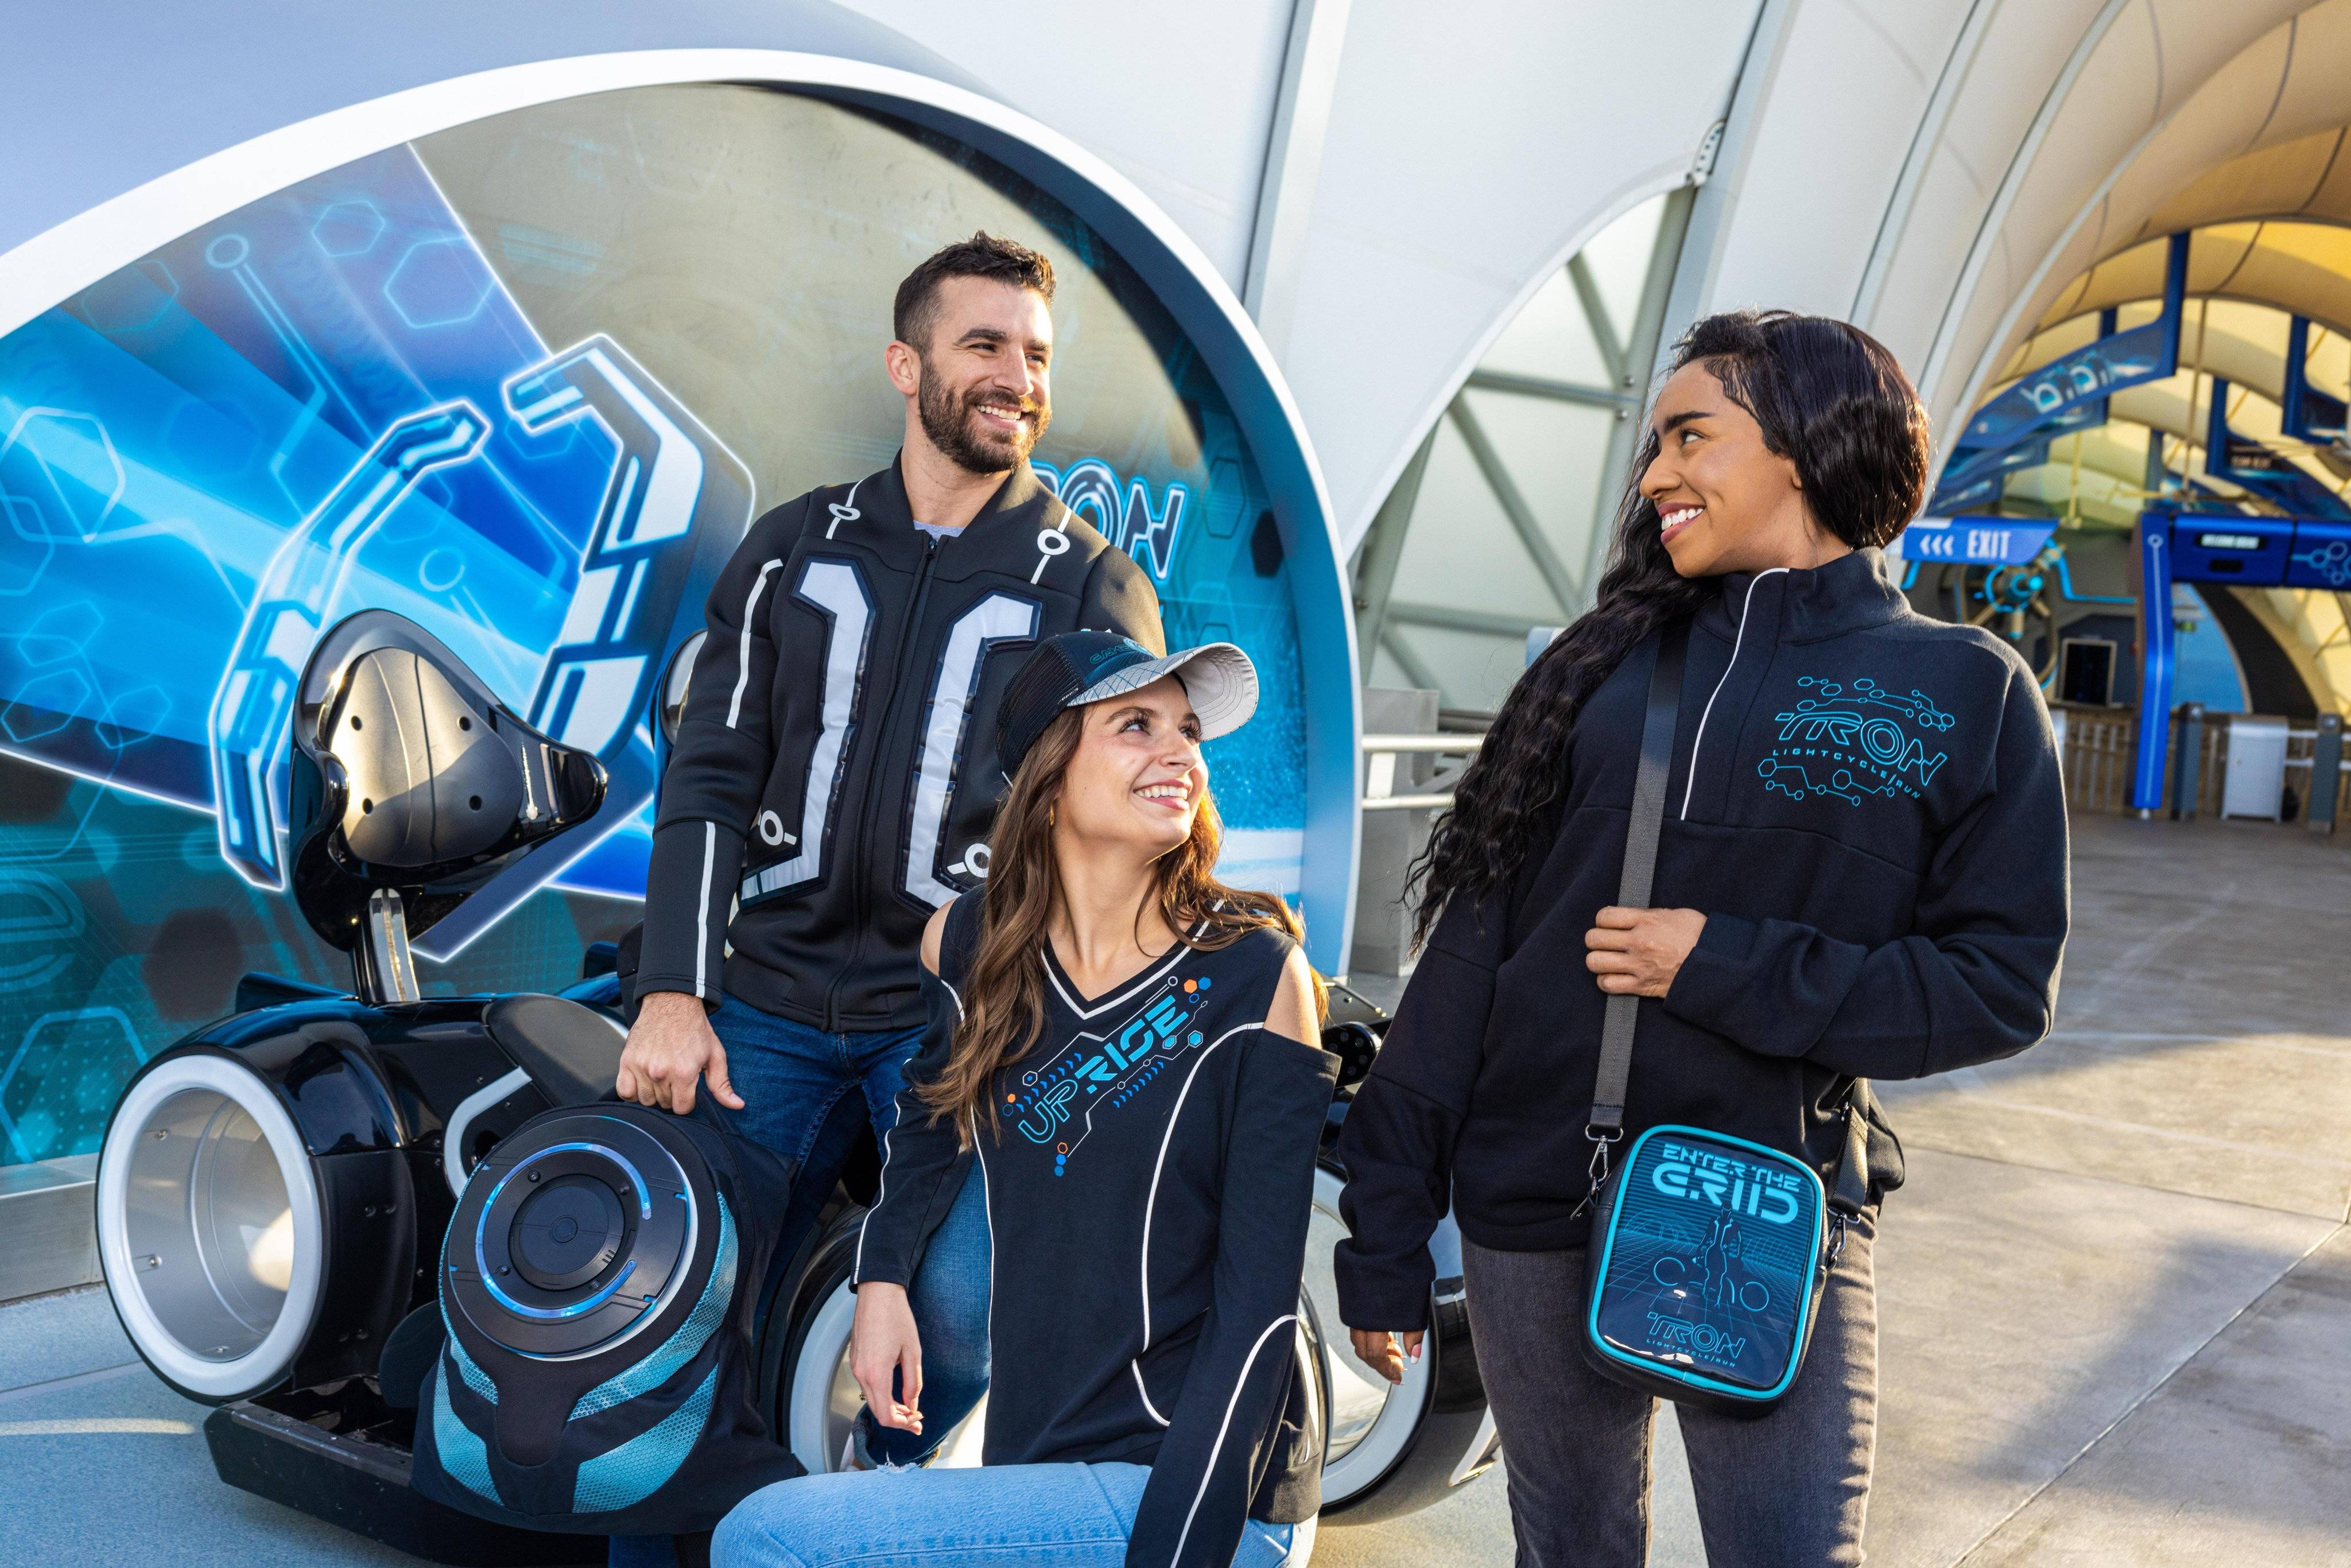 First look at the TRON Lightcycle Run merchandise range coming to Walt Disney World